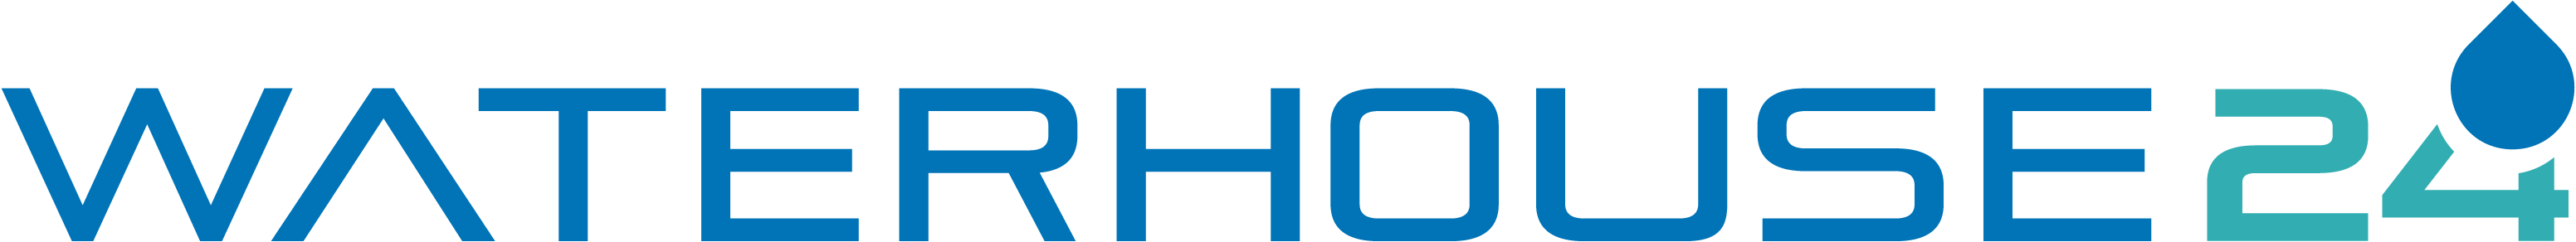 WATERHOUSE24-Logo